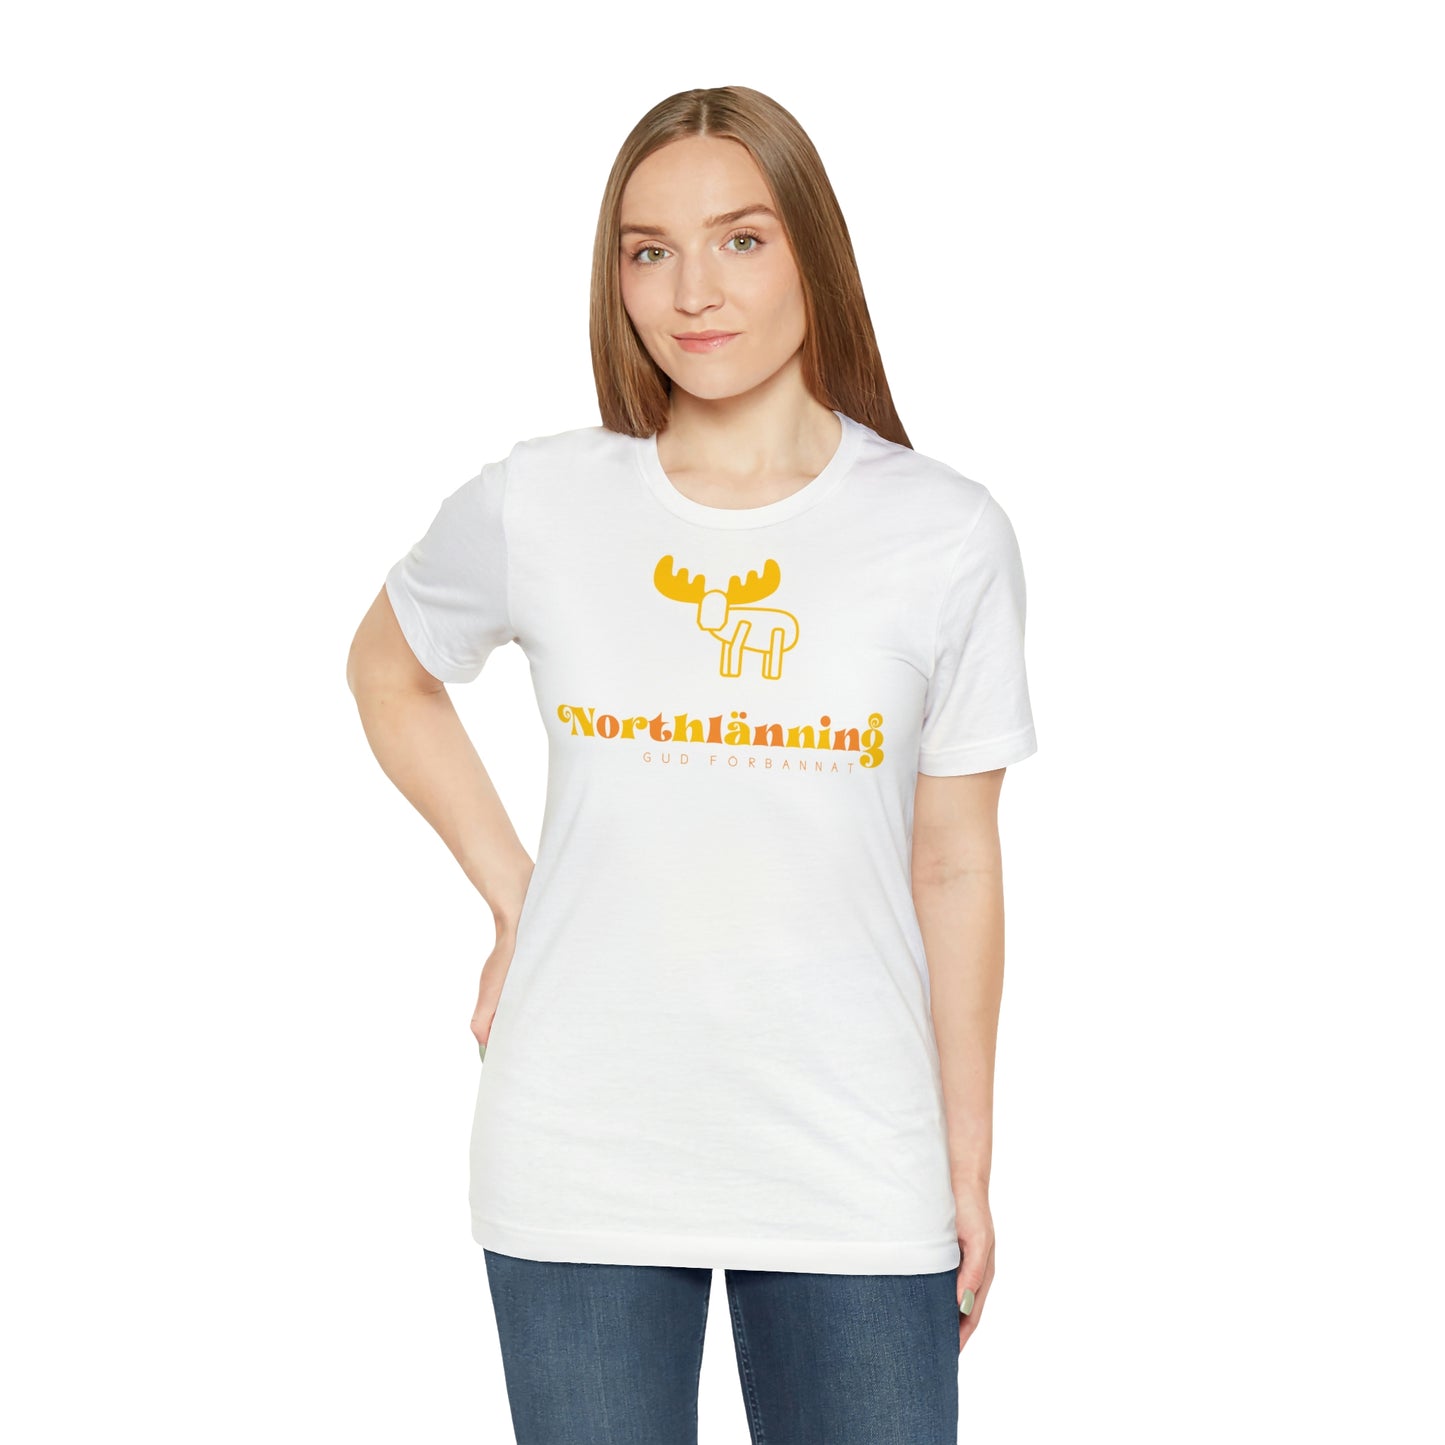 Unisex Northlänning T-shirt, stort tryck